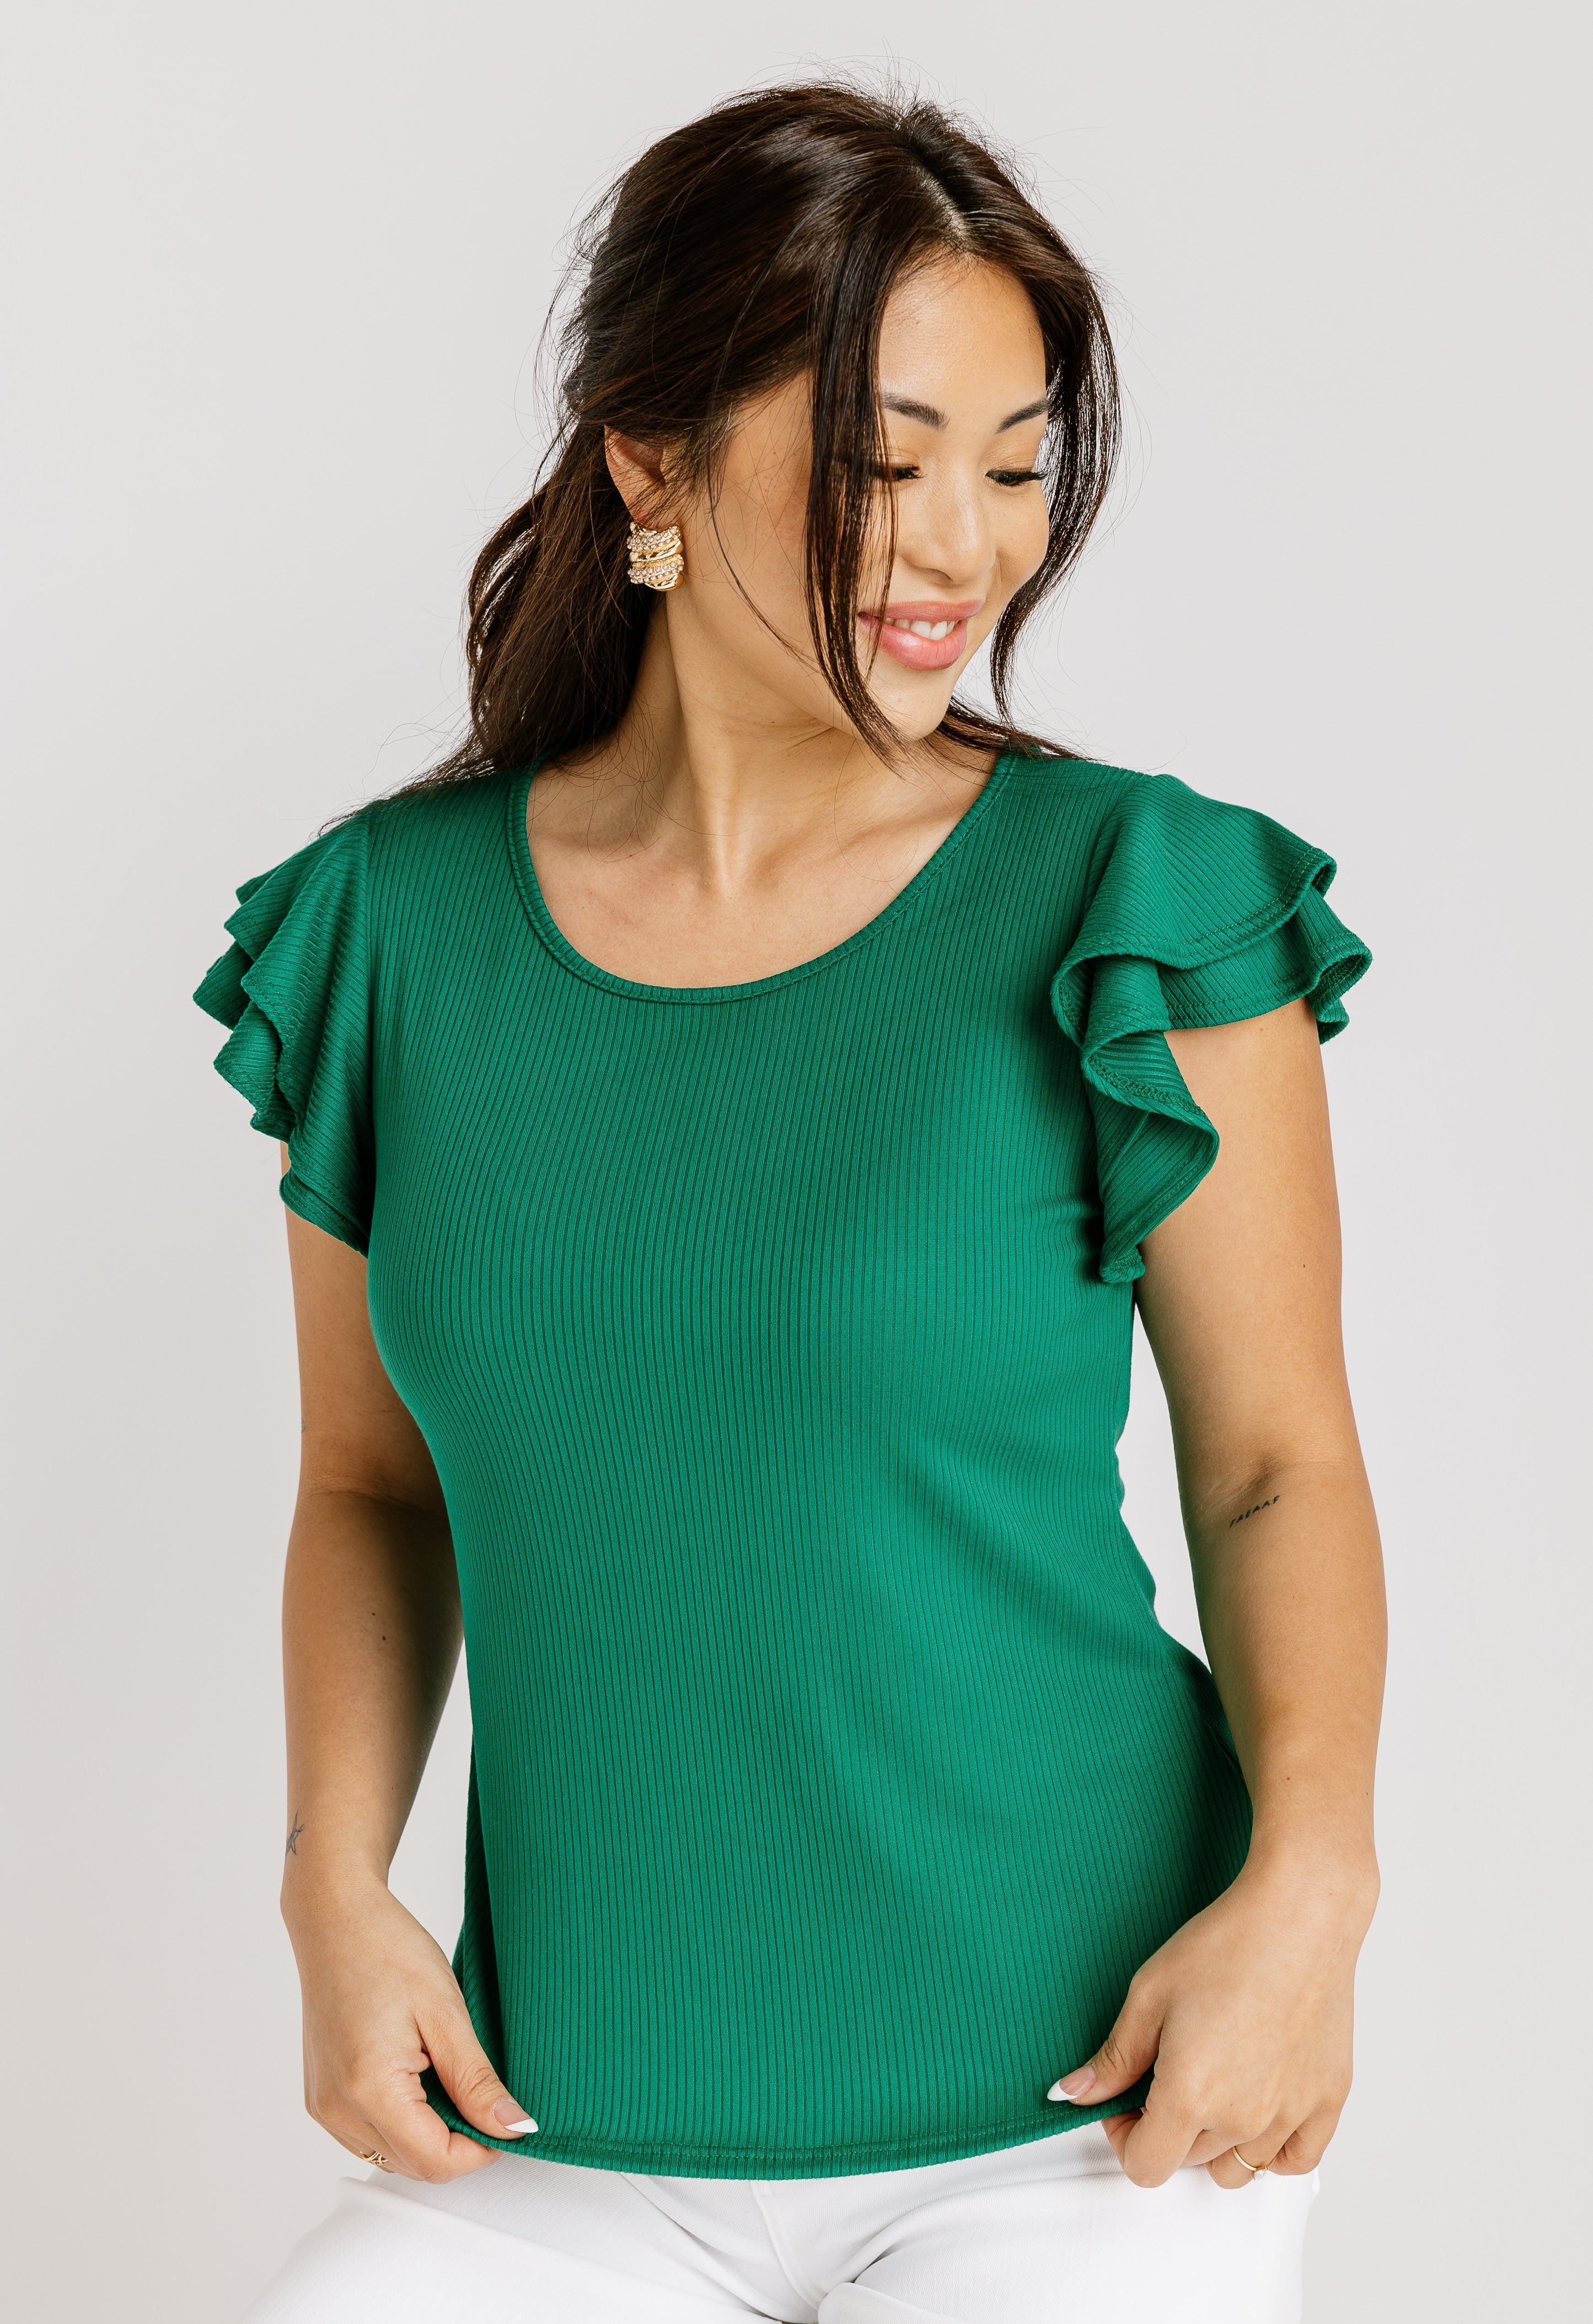 Carlotta Top - KELLY GREEN - willows clothing S/S Shirt